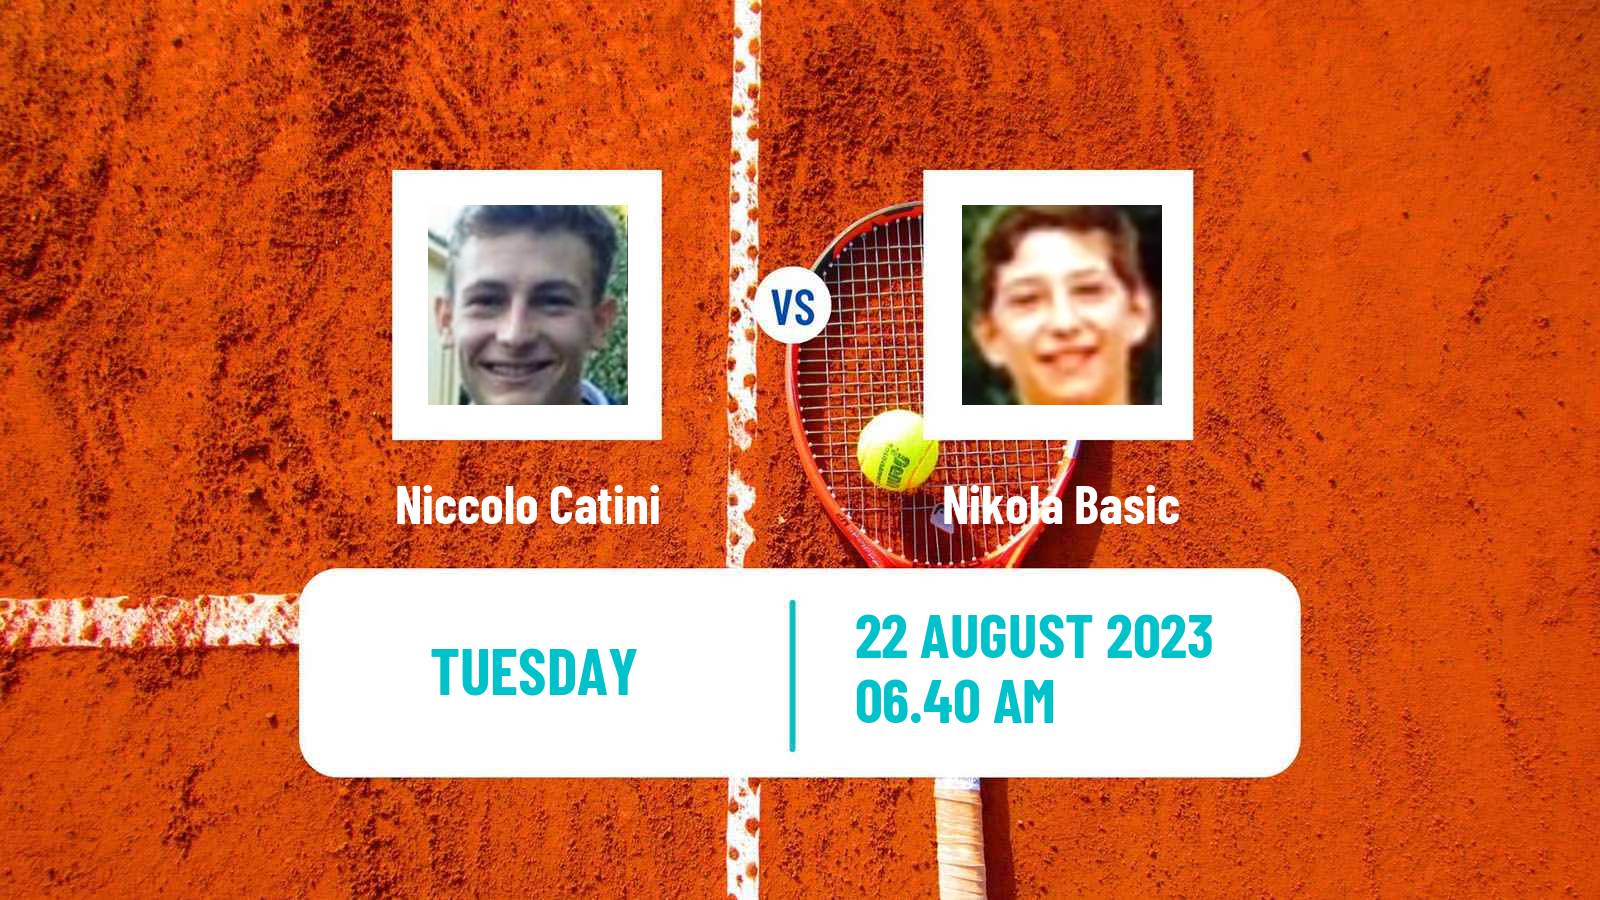 Tennis ITF M25 Lesa Men Niccolo Catini - Nikola Basic